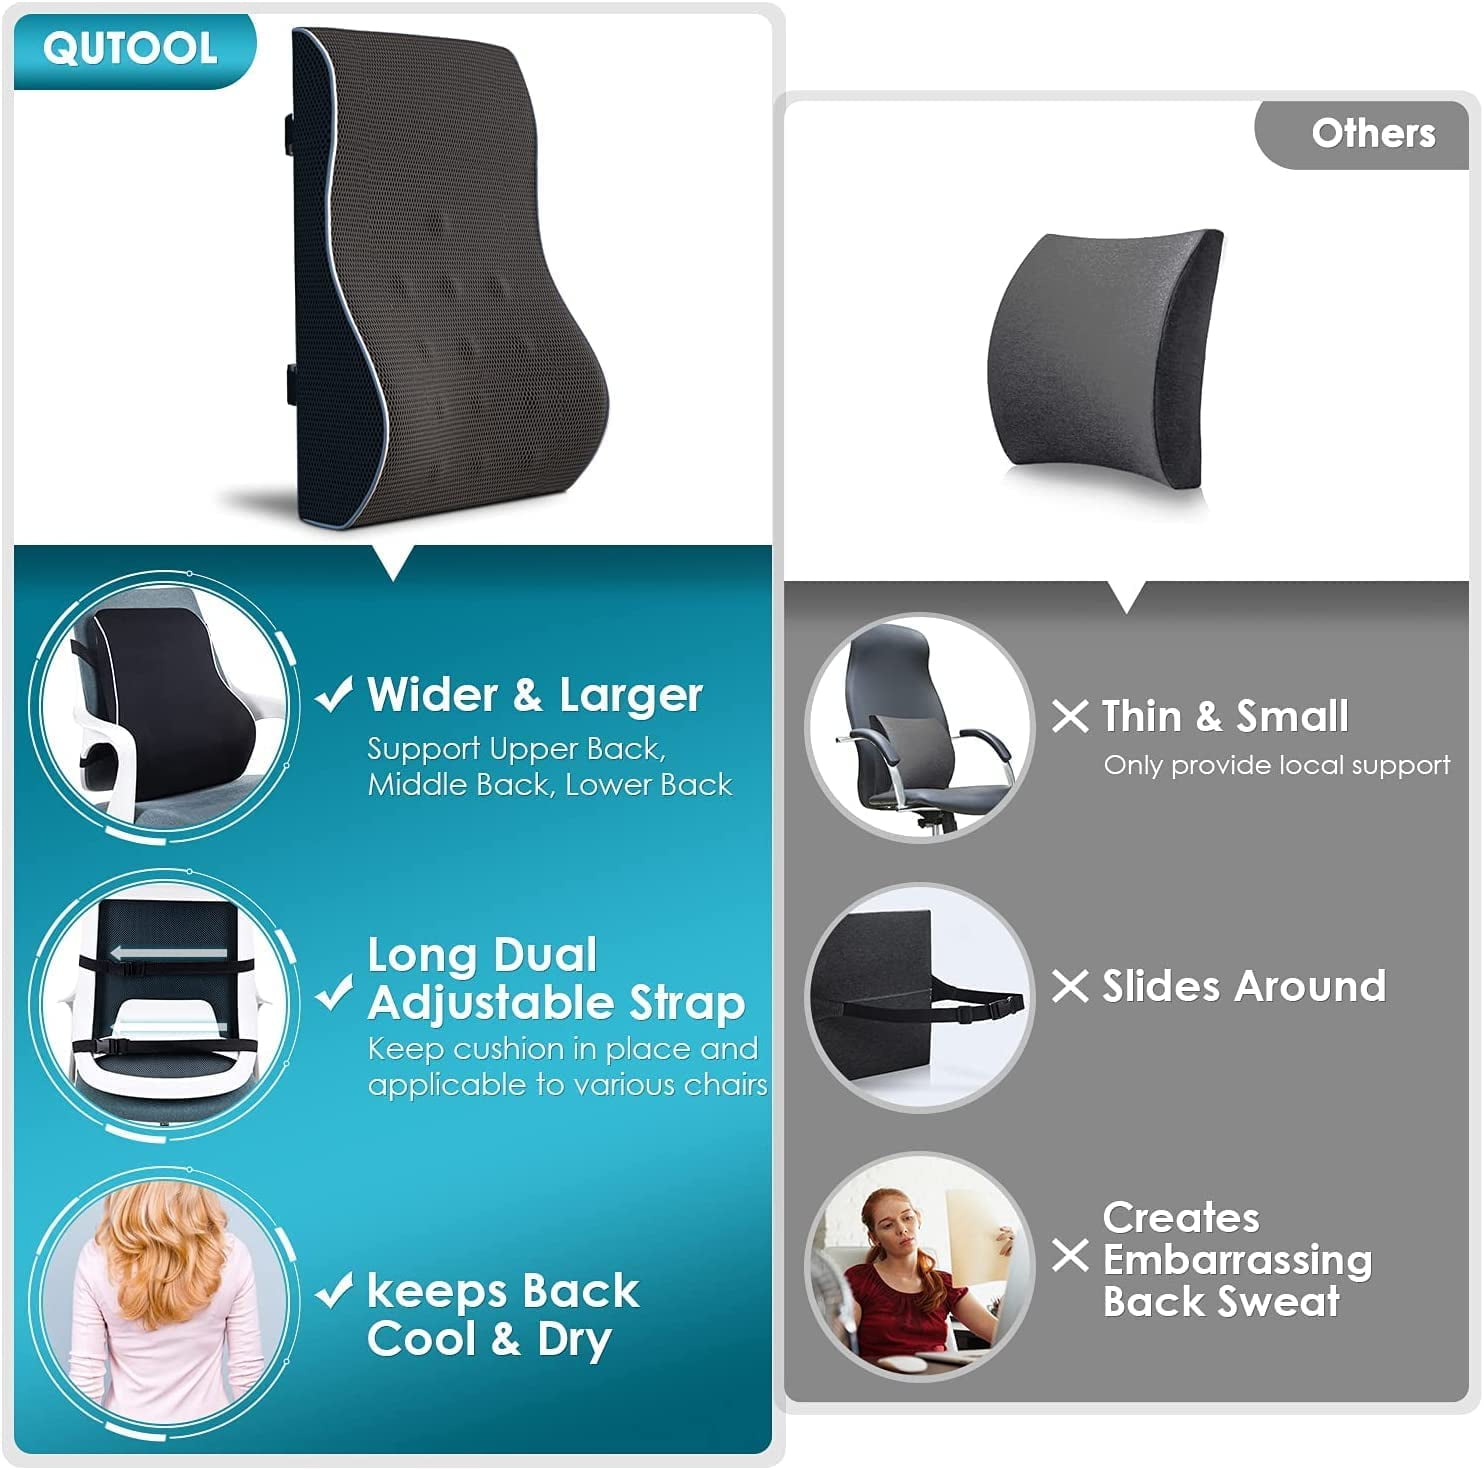 QUTOOL Lumbar Support Pillow for Office Chair – Qutool® Store